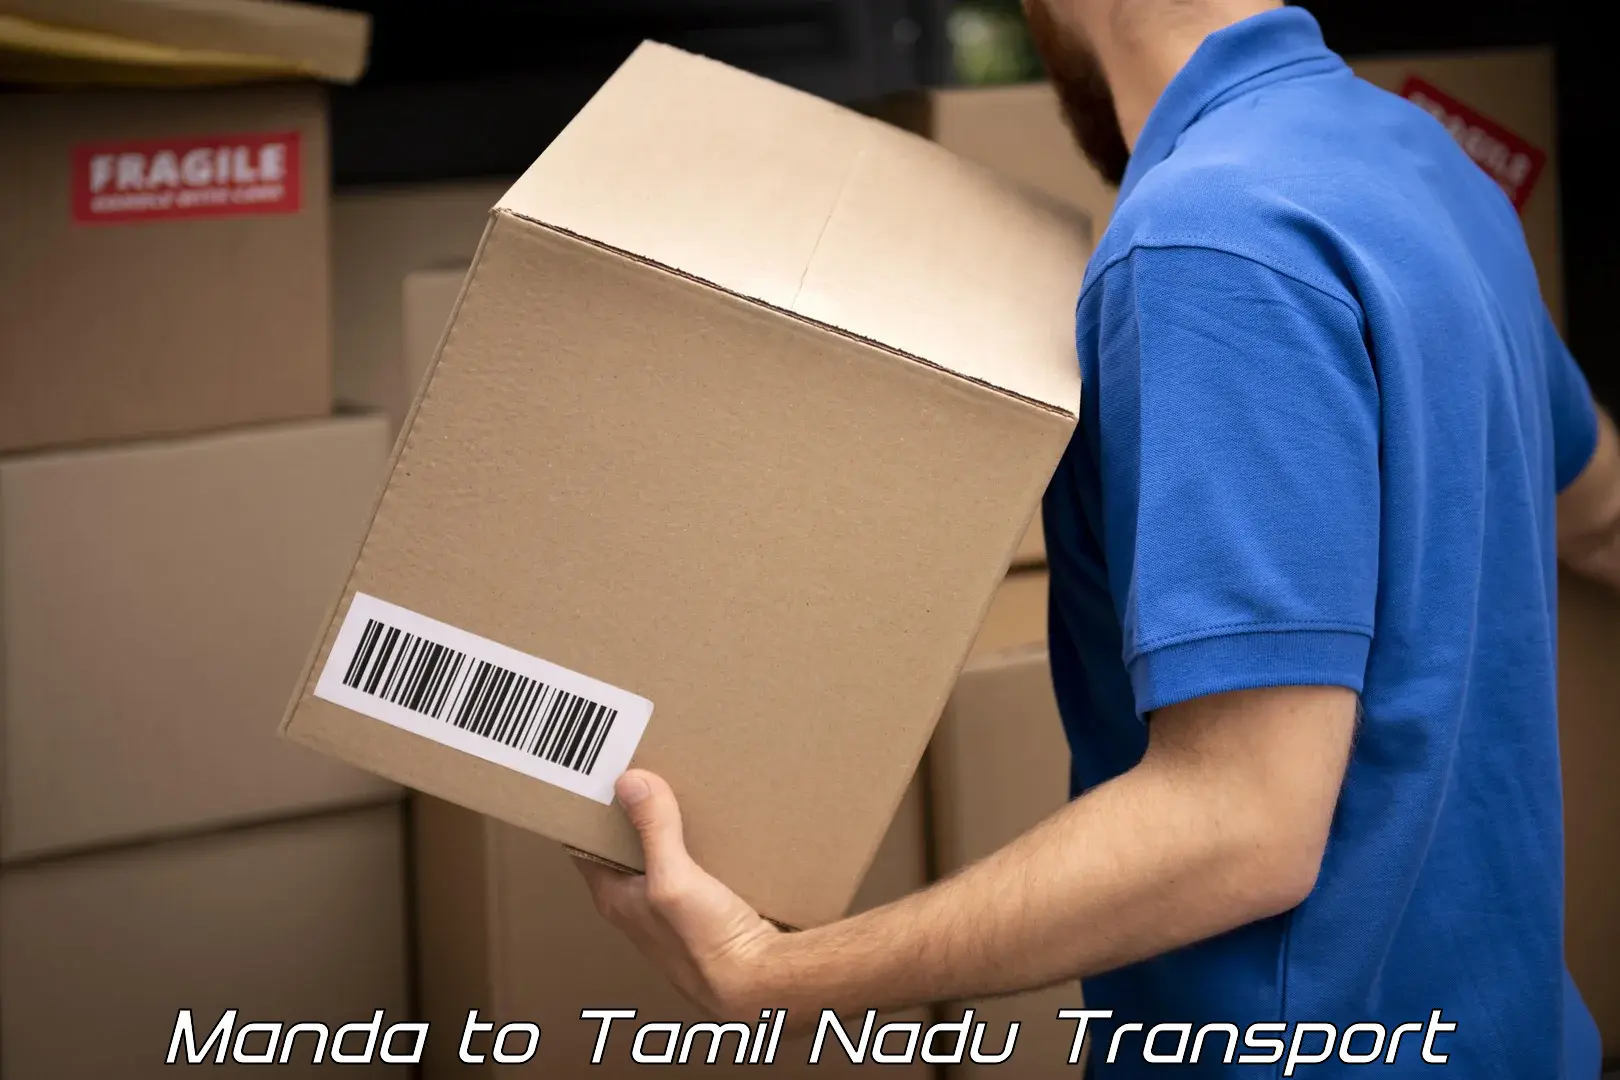 Truck transport companies in India Manda to Chennai